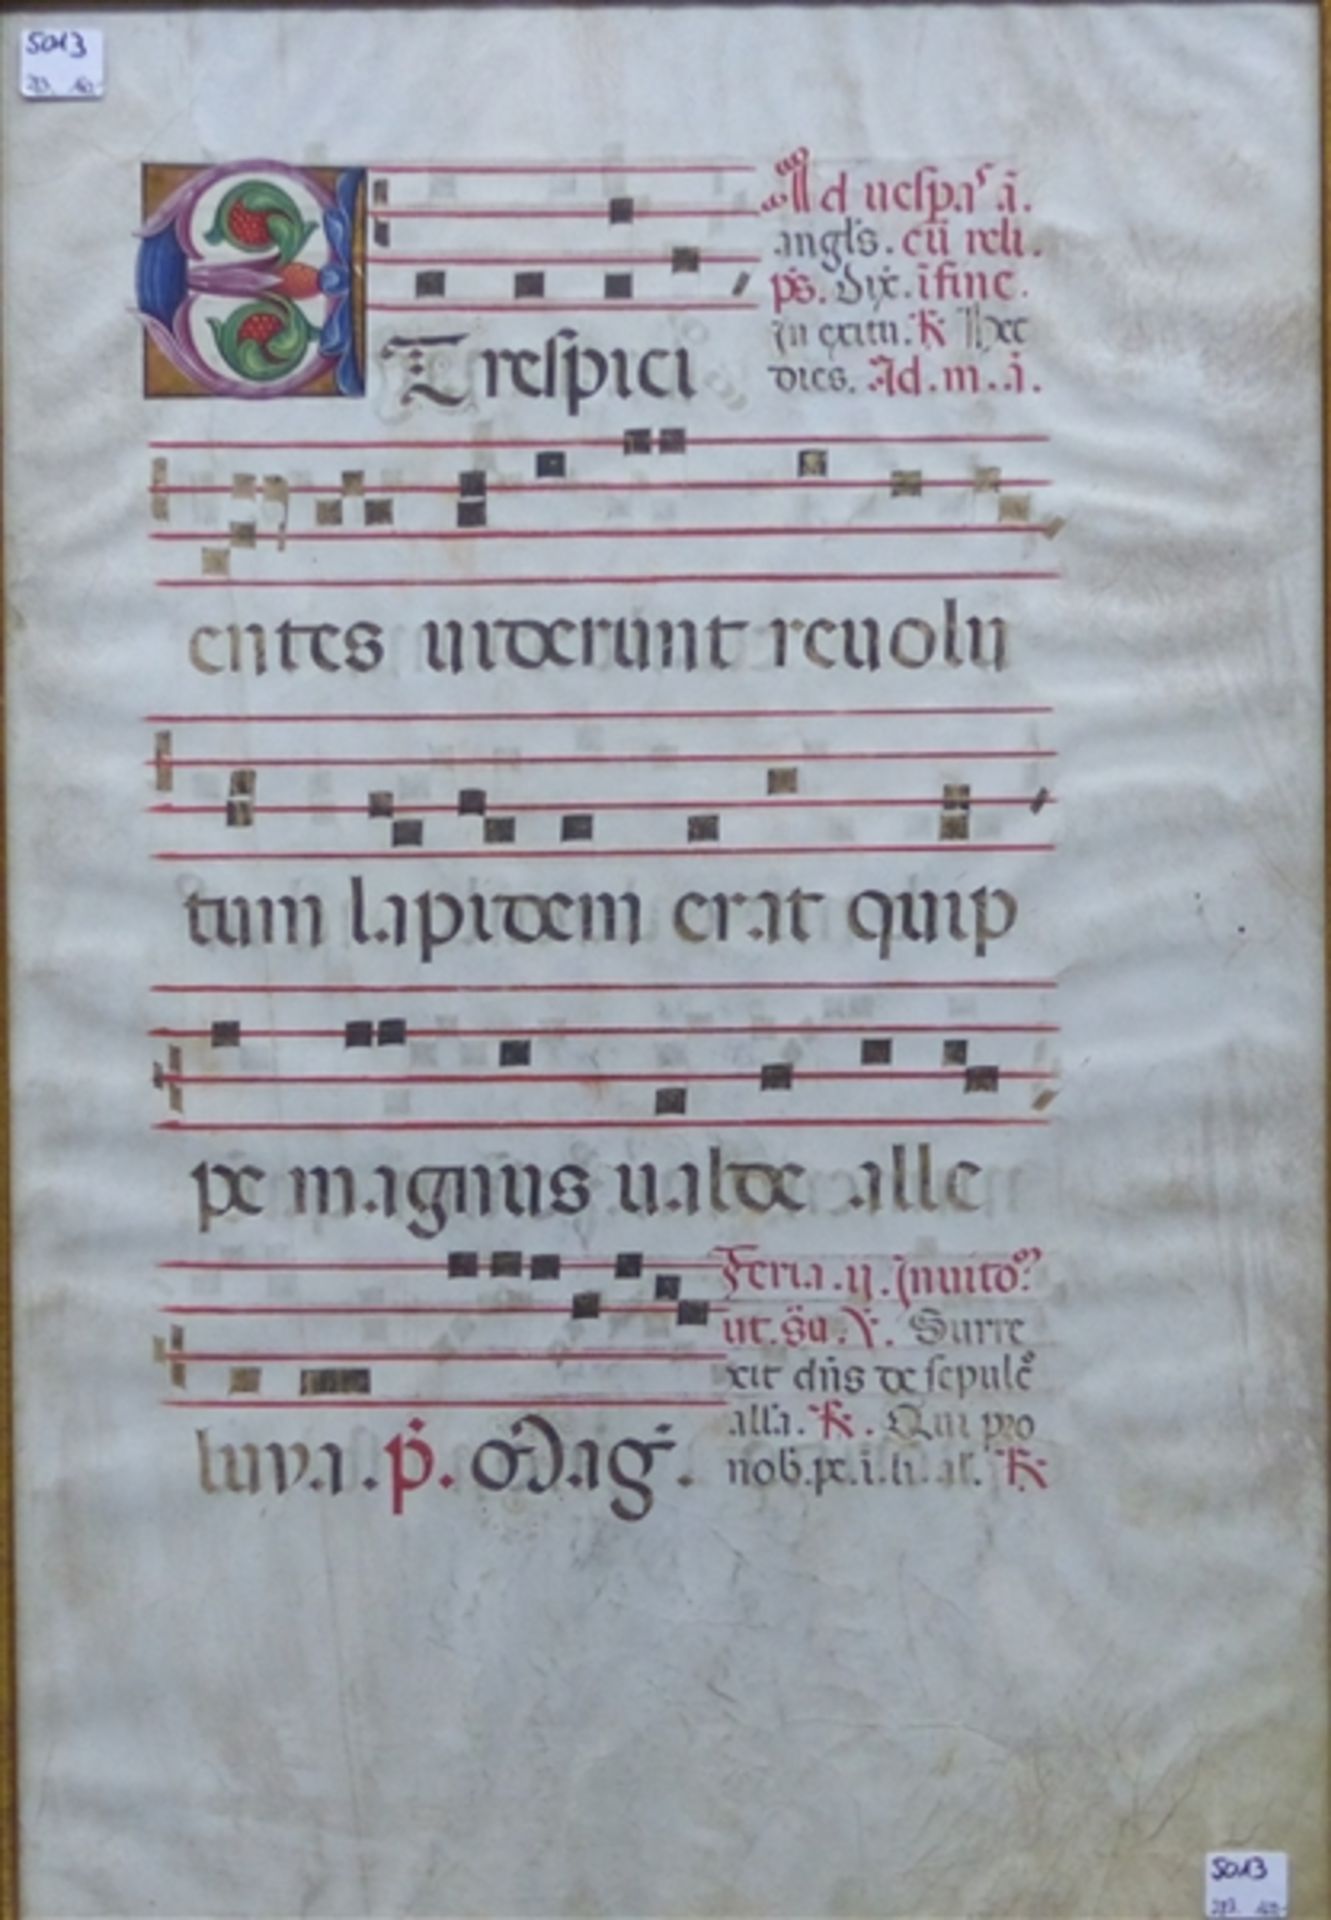 Pergamentblatt doppelseitig gerahmt, antike Notenblätter, 17. Jh., bemalt, selten, 54x36 cm, im